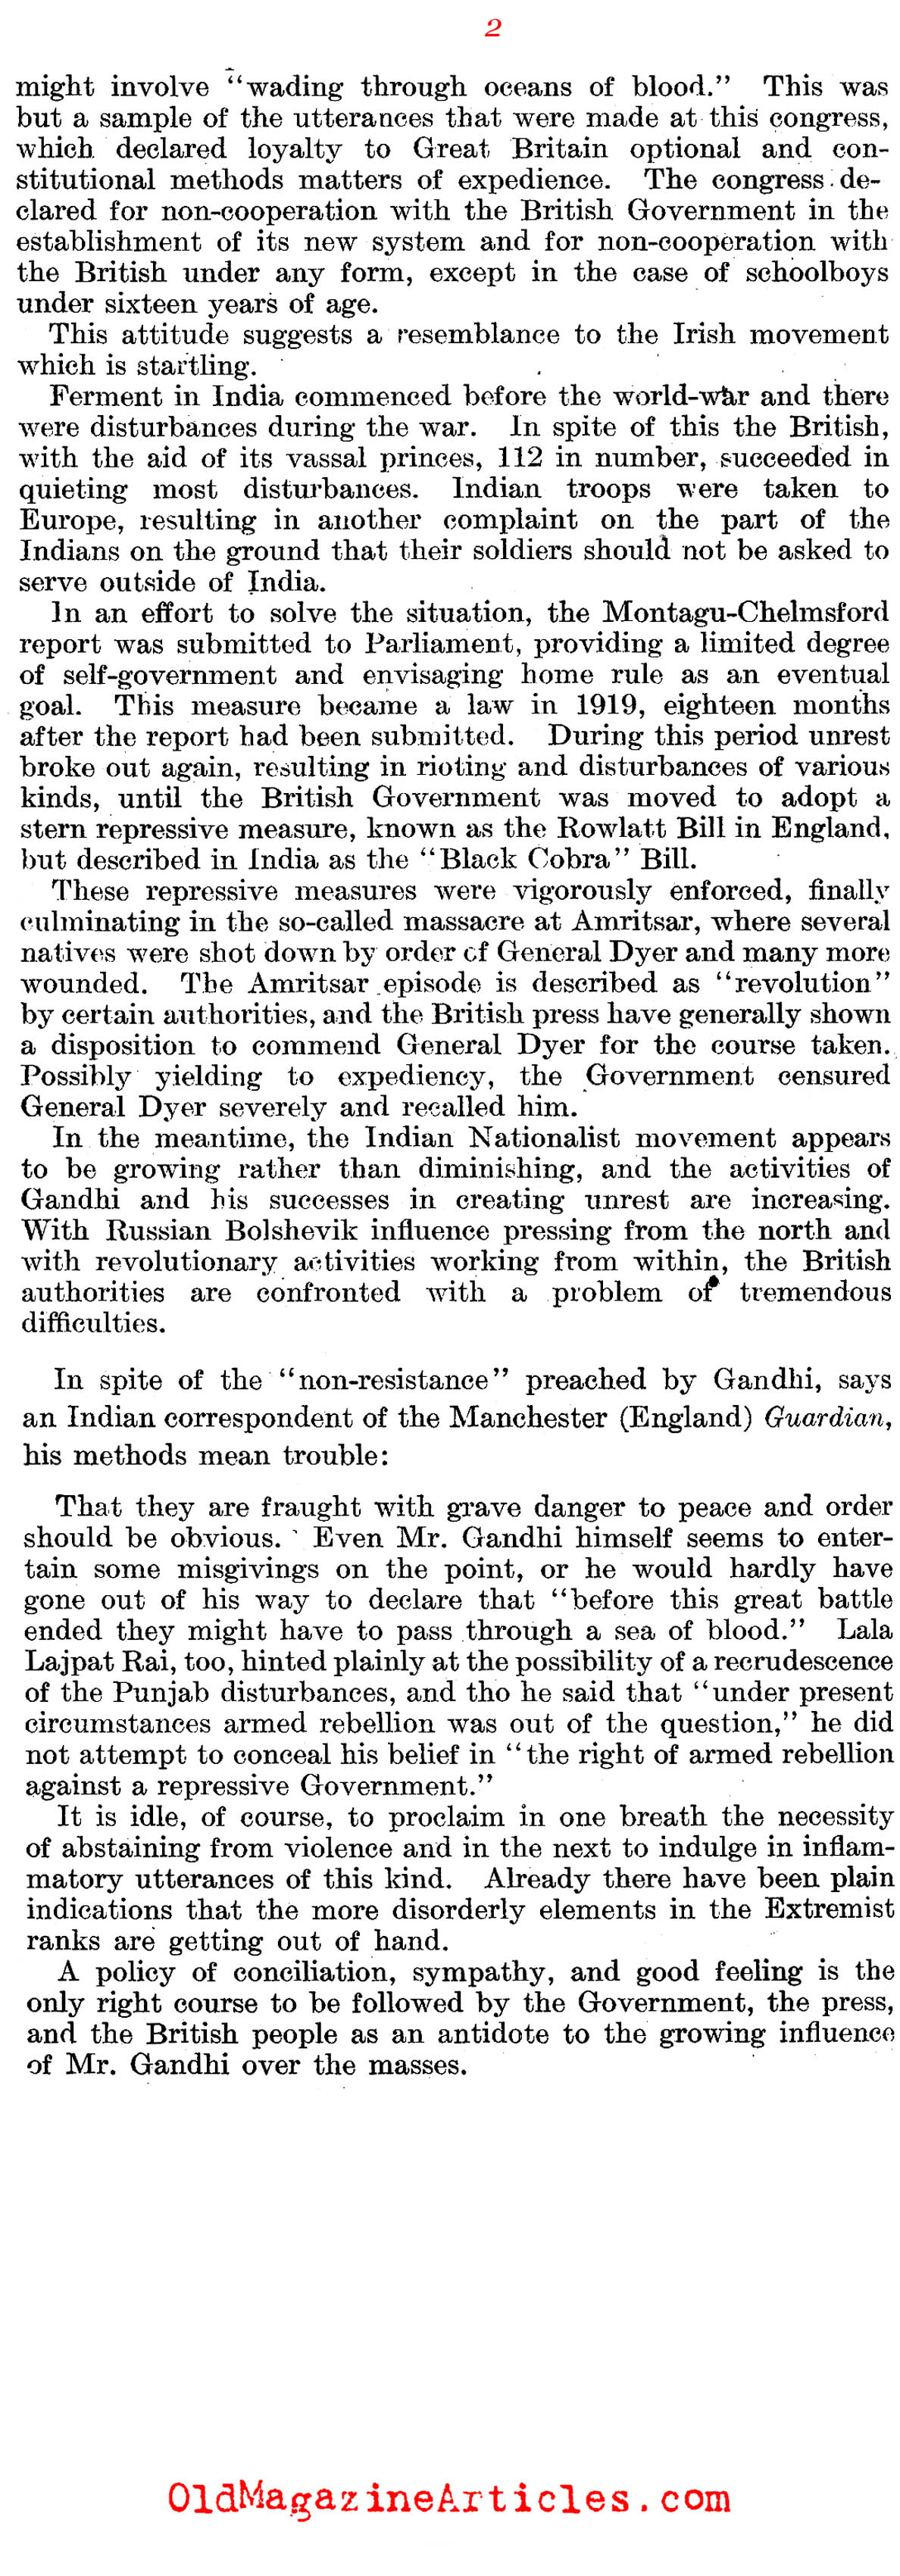 Slandering  Gandhi  (The Literary Digest, 1921)